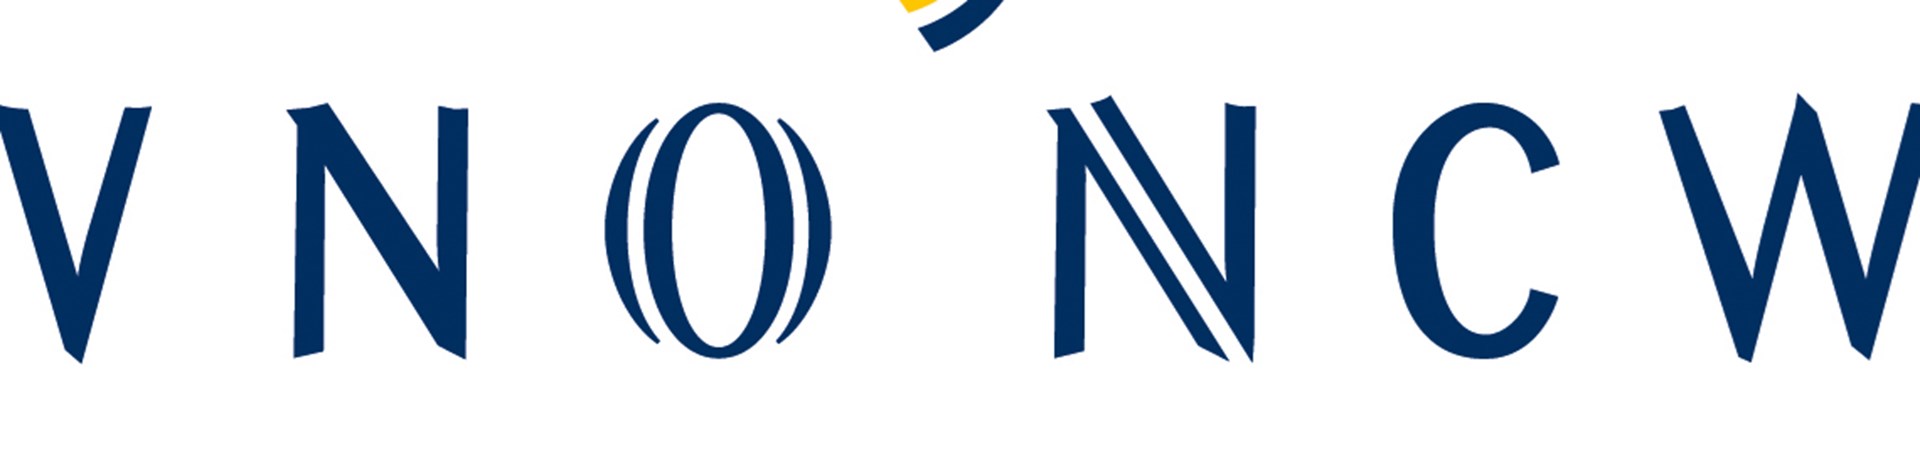 VNO NCW Midden Logo Groot 300Dpi